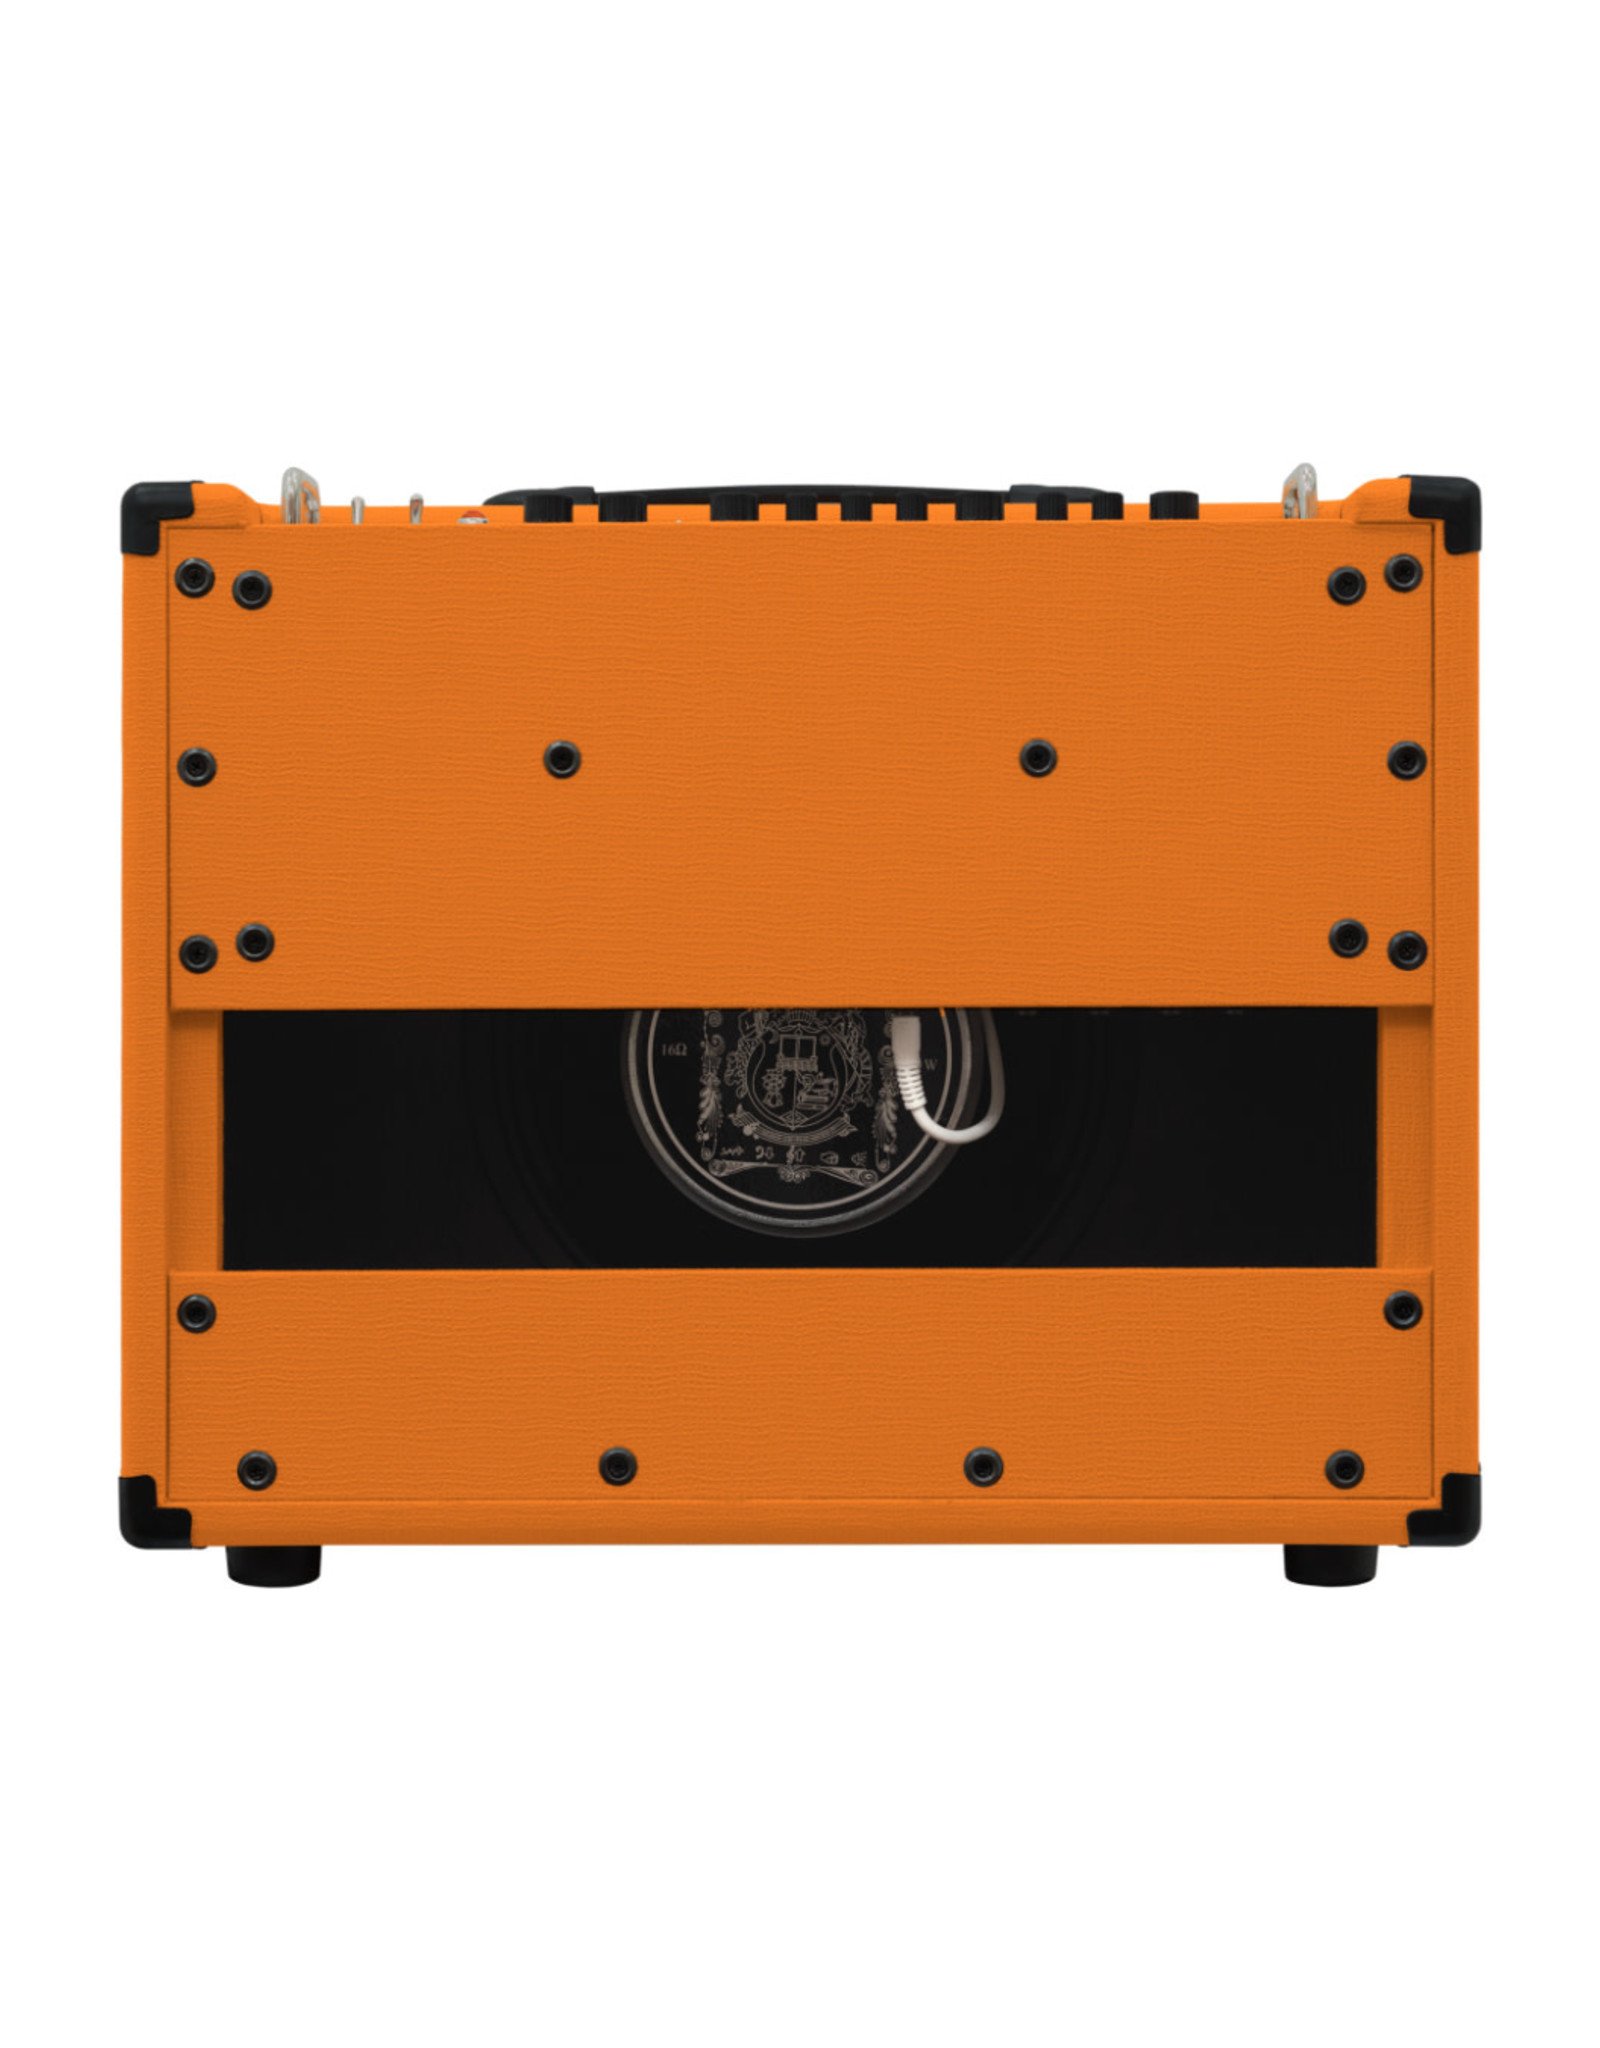 Orange Orange Crush Pro 60 Guitar Amplifier